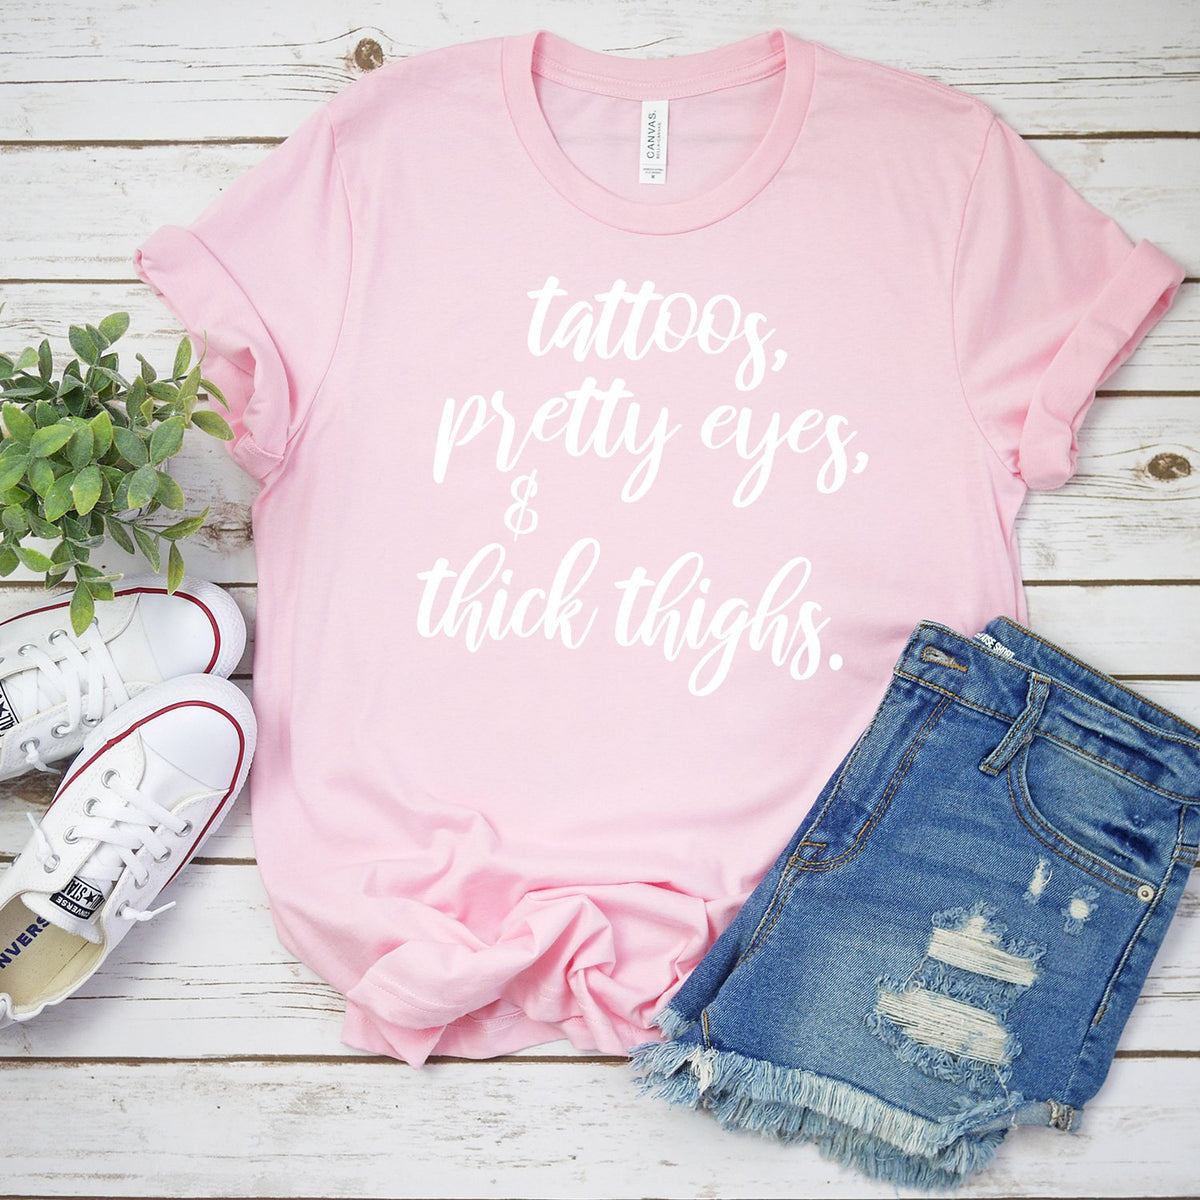 Tattoos, Pretty Eyes &amp; Thick Thighs - Short Sleeve Tee Shirt